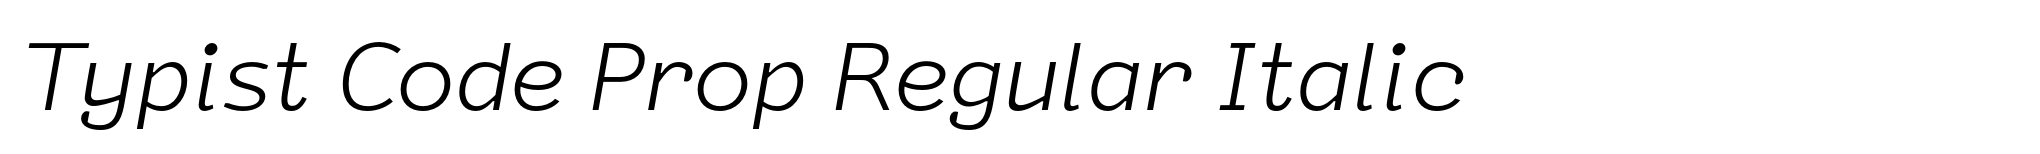 Typist Code Prop Regular Italic image